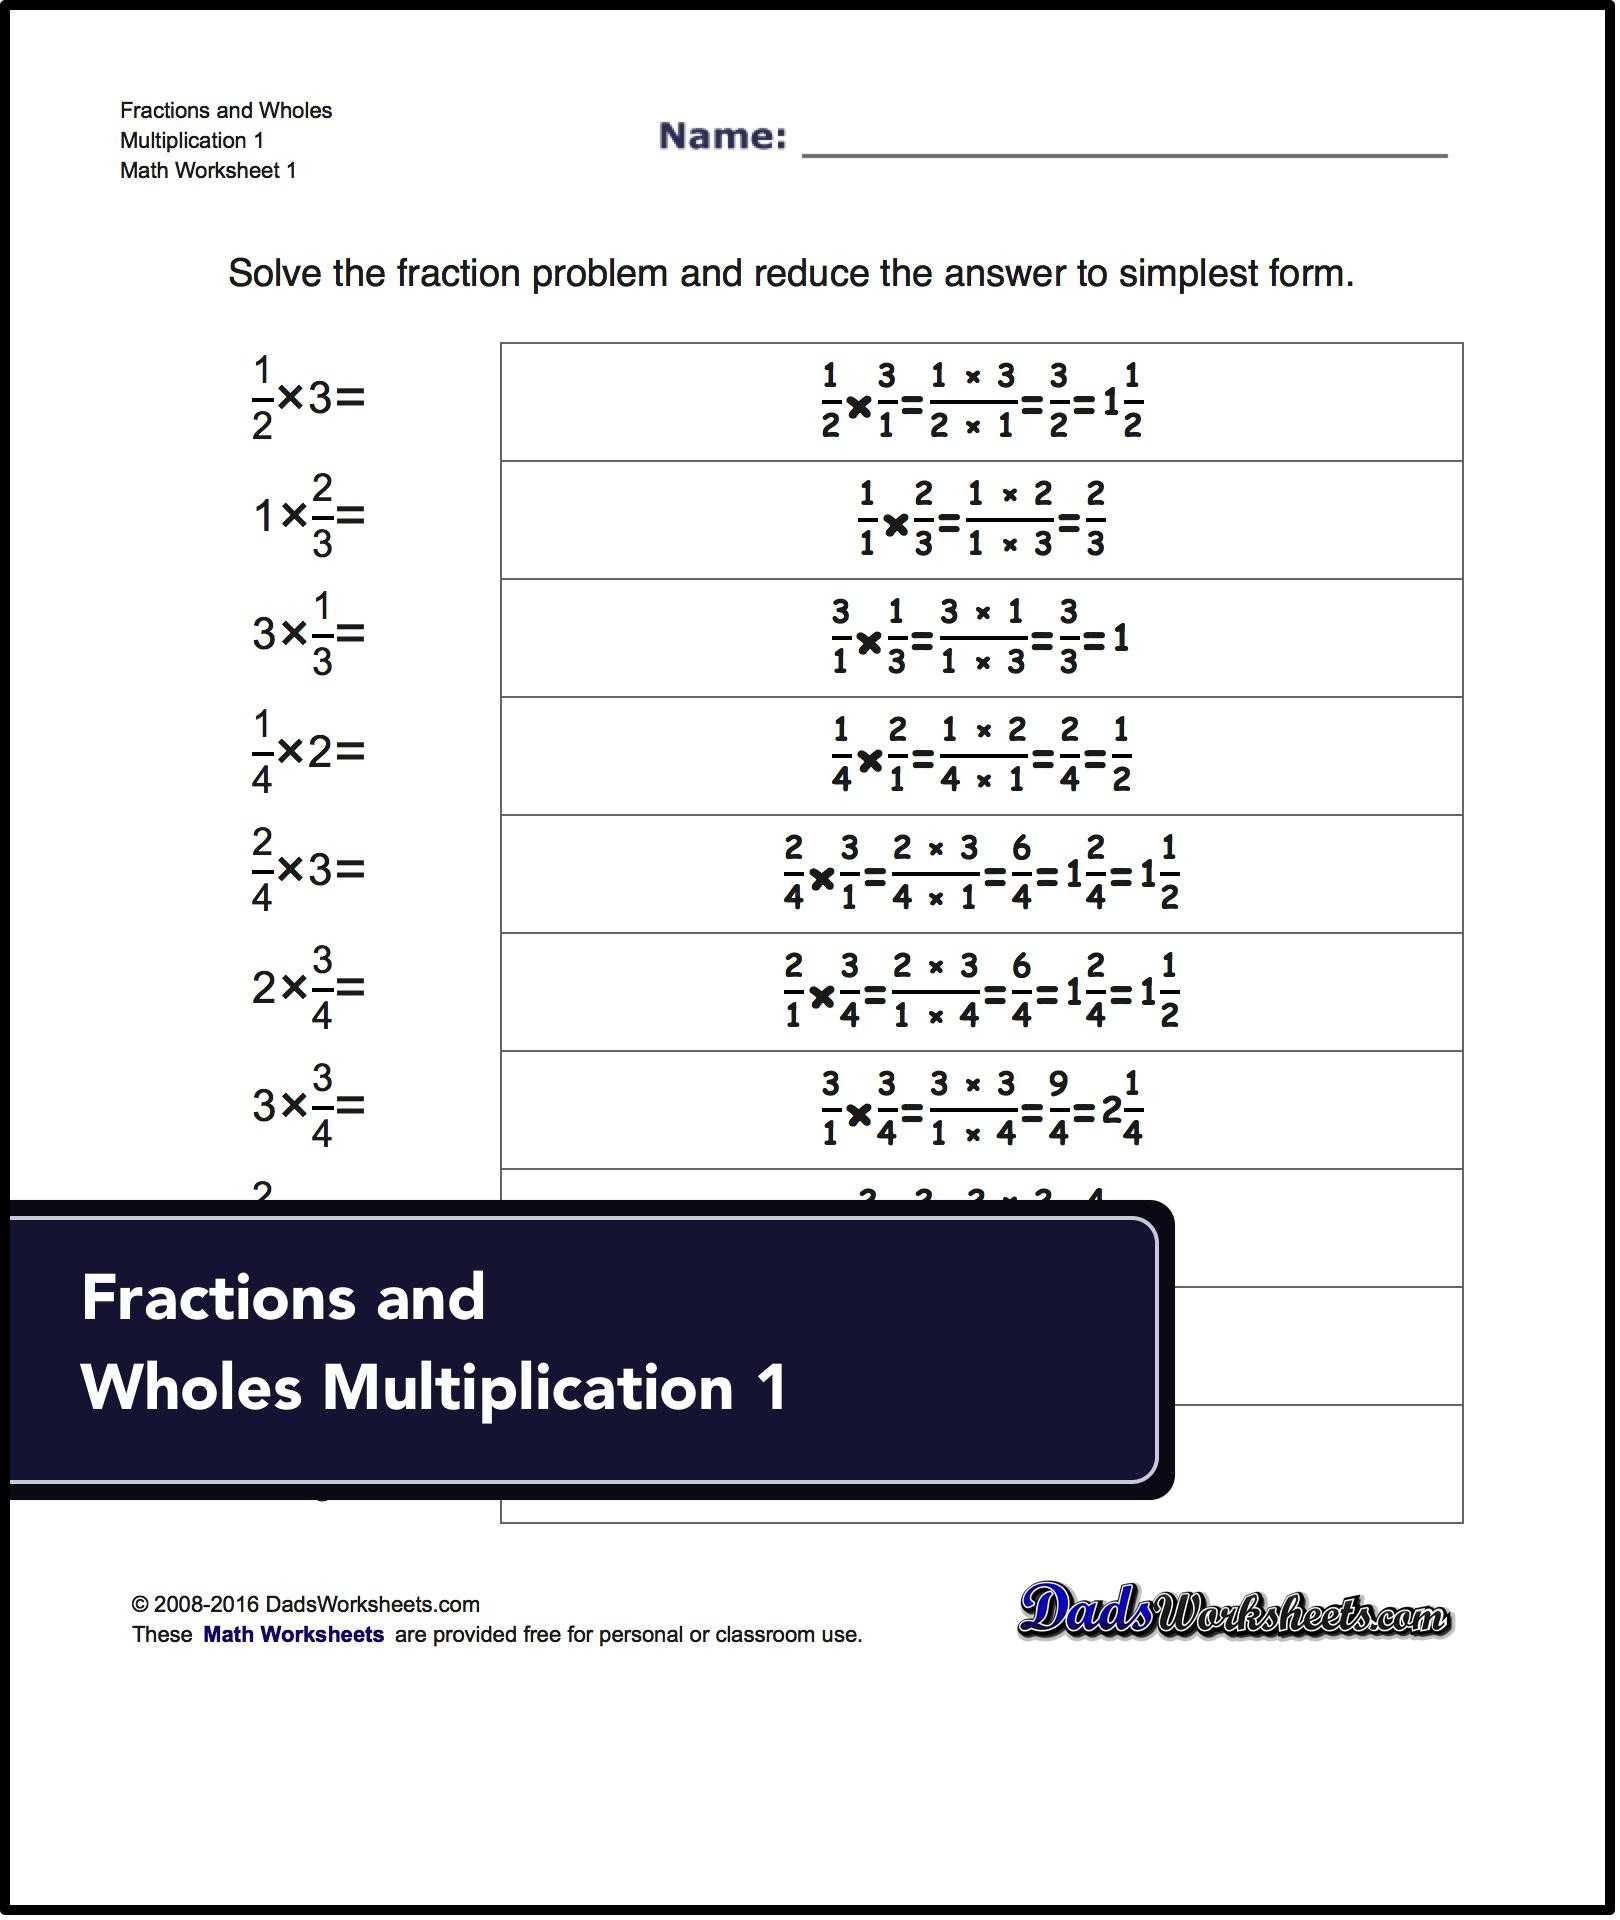 Free Comprehension Worksheets Also Word form Worksheets Best Arithmetic Worksheets Parpadeo New